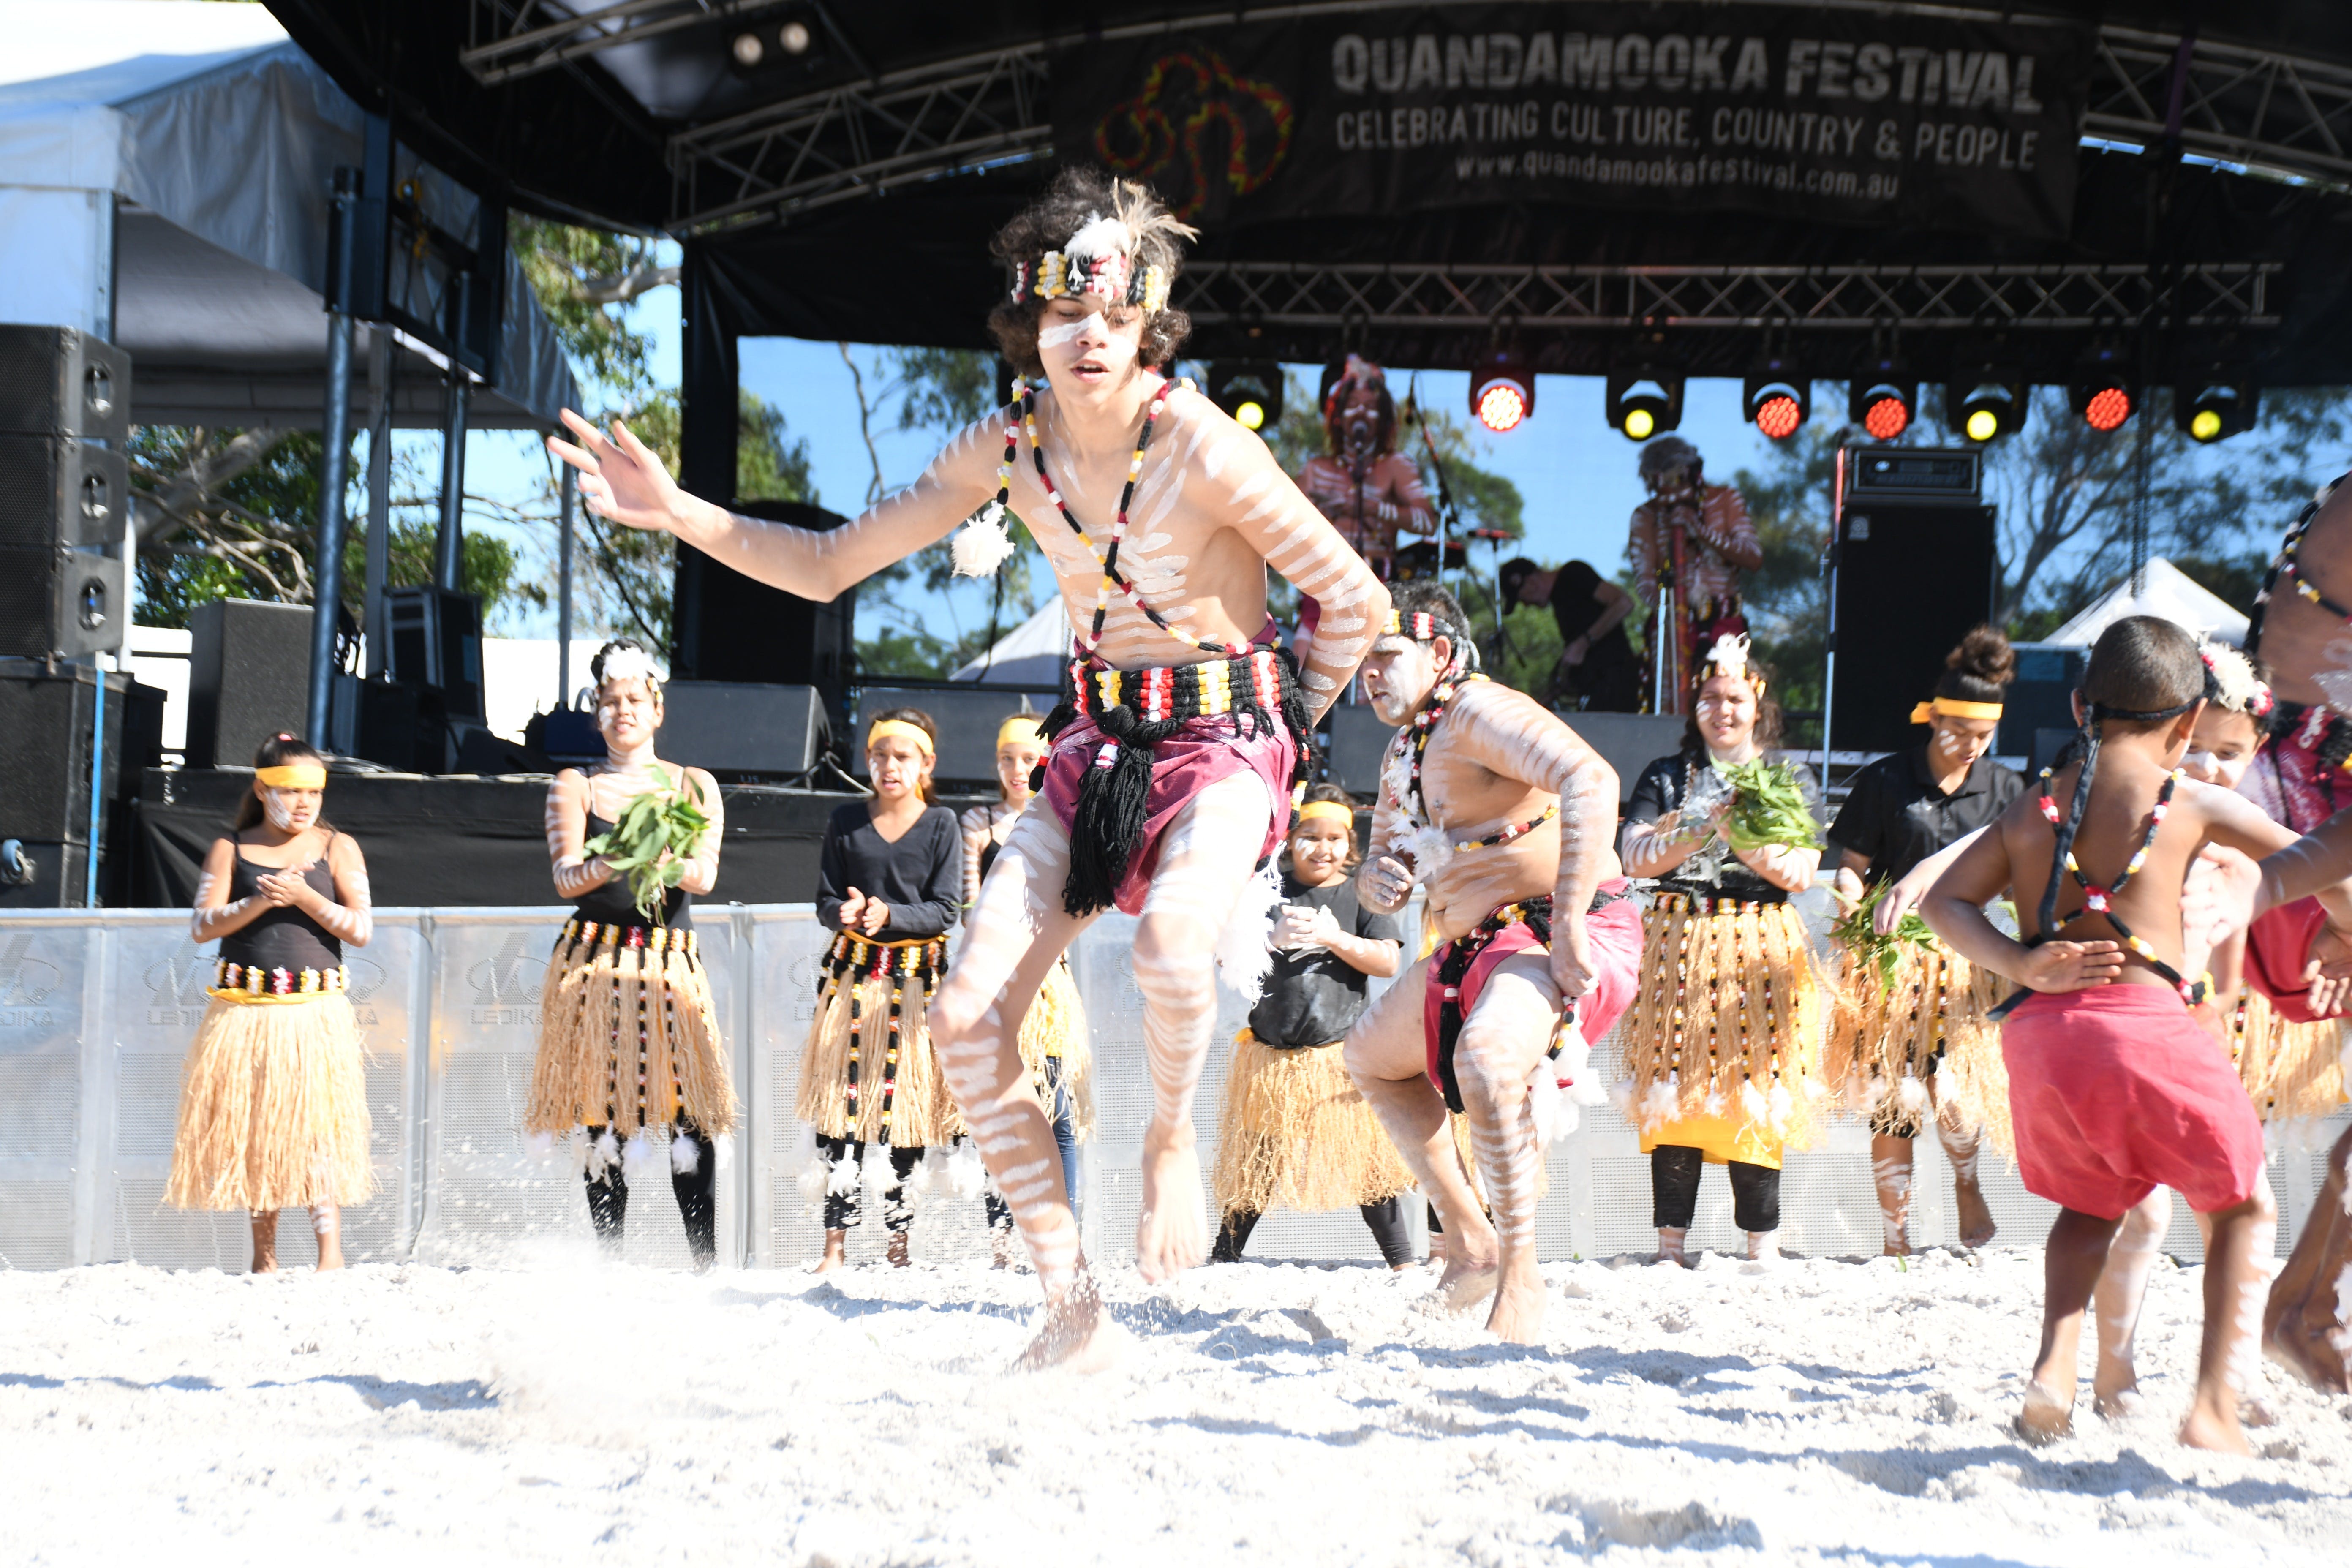 Quandamooka Festival 2021 - C Tourism